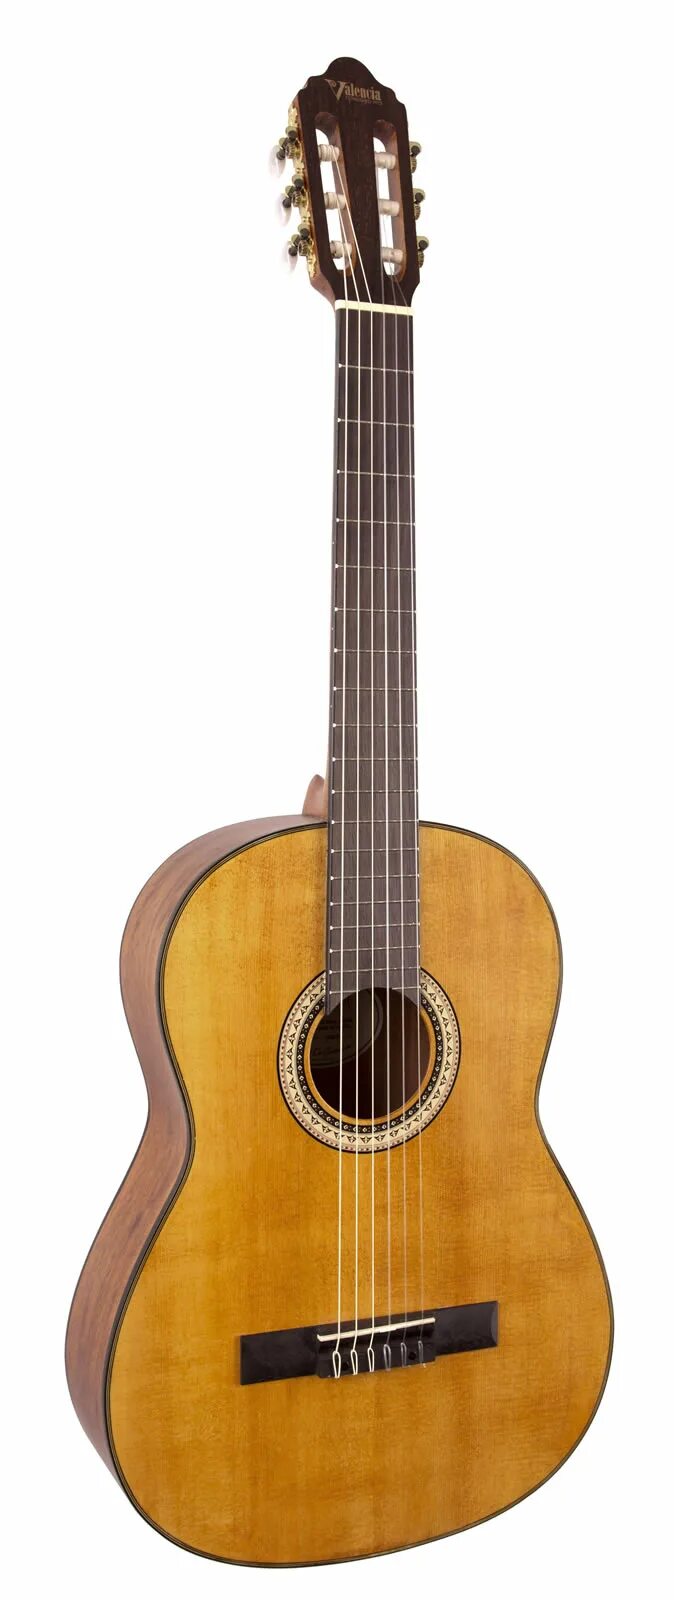 Гитара Sigma cm-6nf. Валенсия гитара классика. Классическая гитара Алстон dc940. Акустическая гитара 3/4 Valencia.